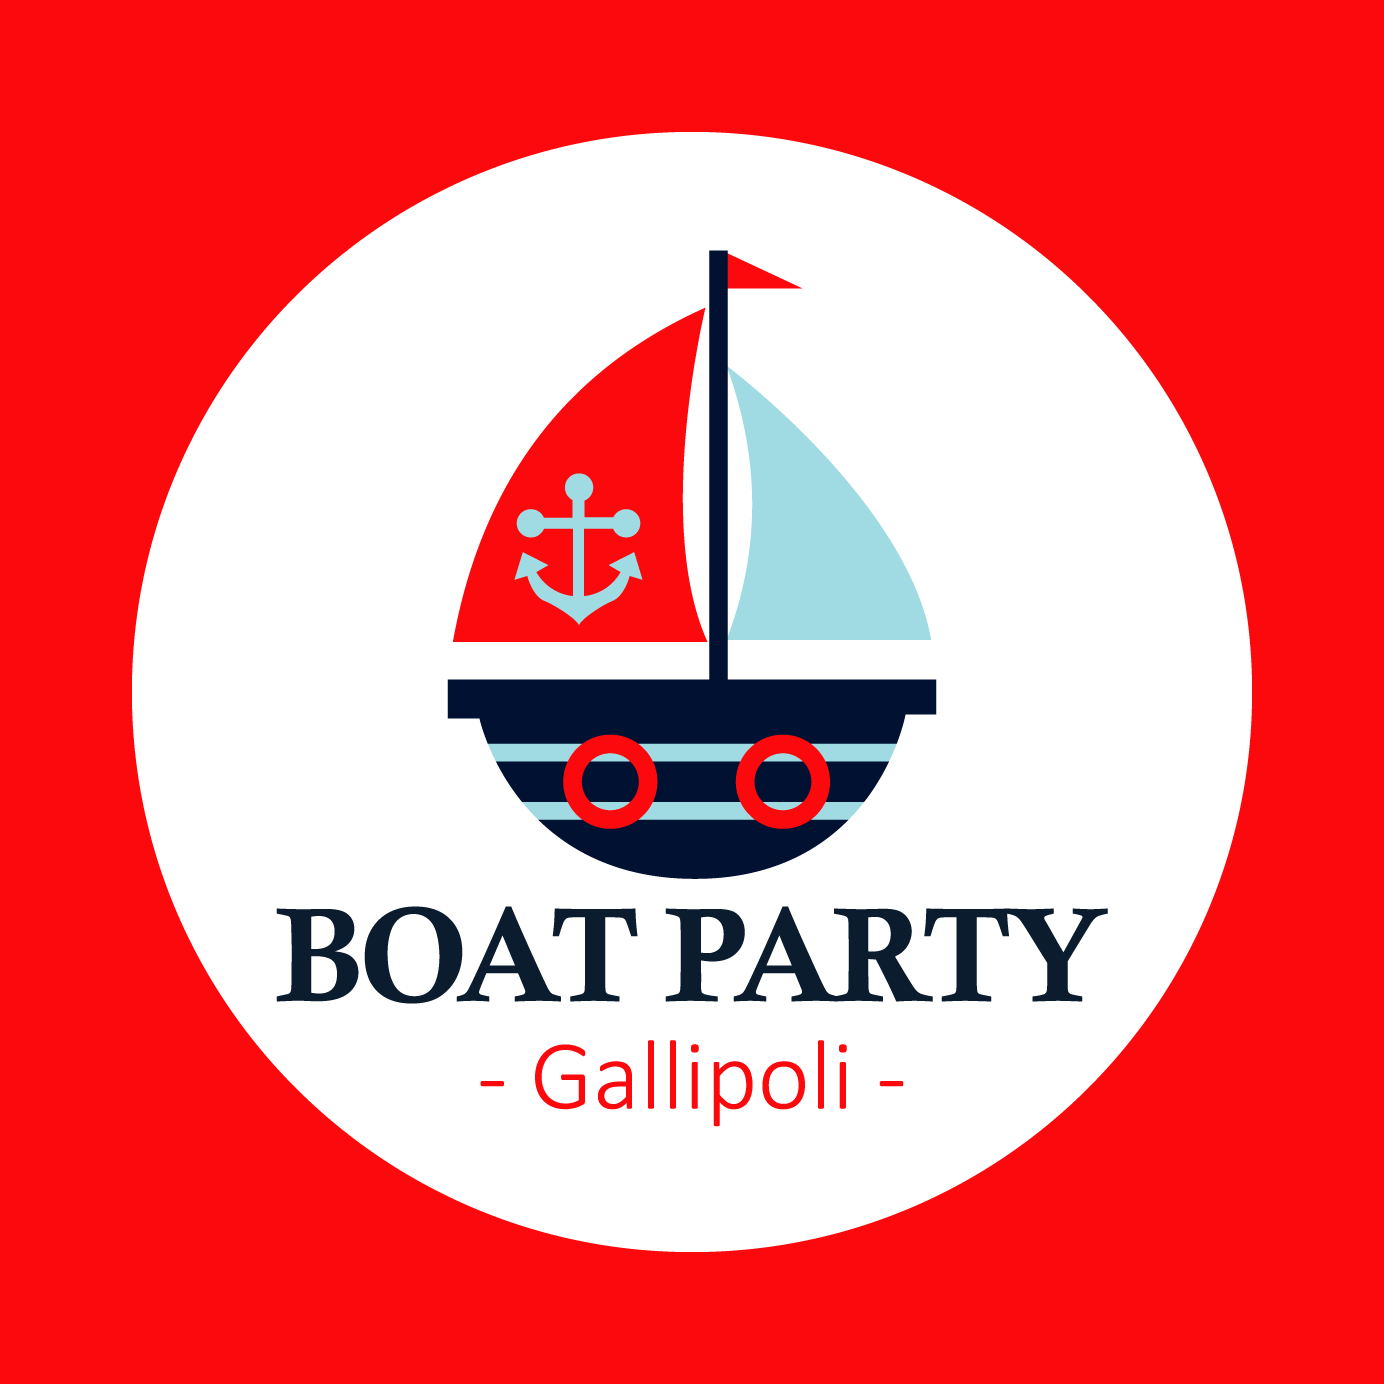 BOAT PARTY GALLIPOLI